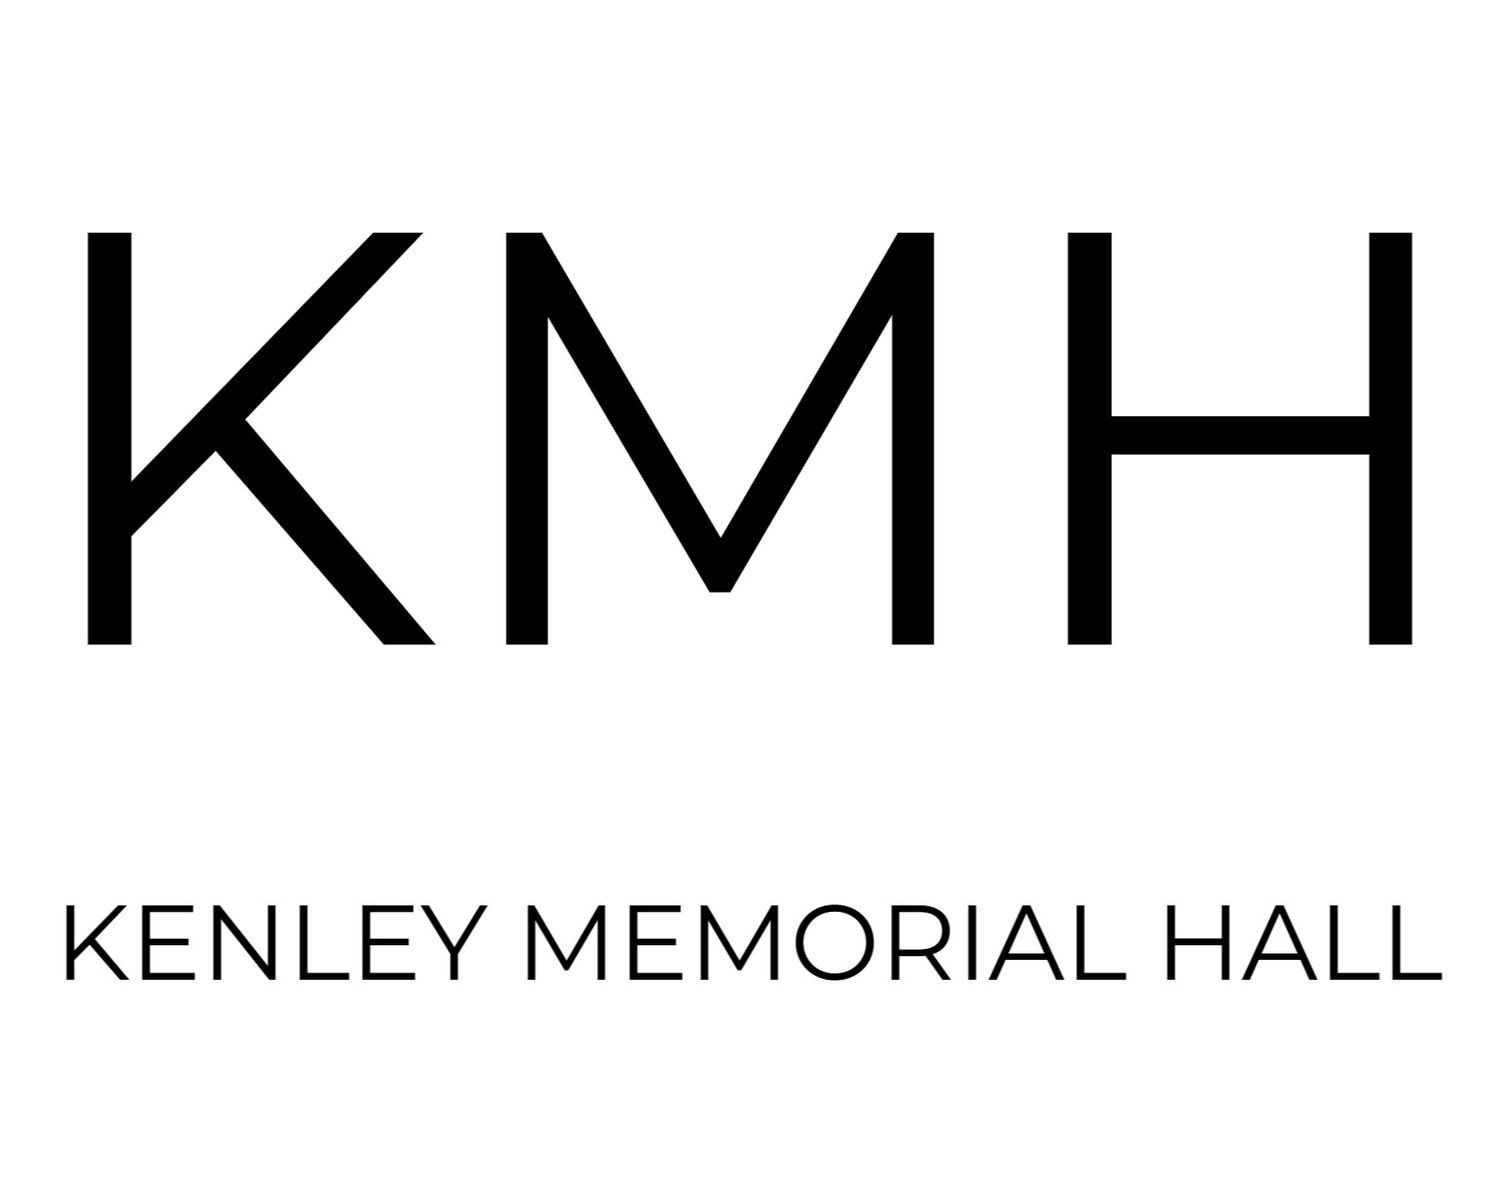                Kenley Memorial Hall 